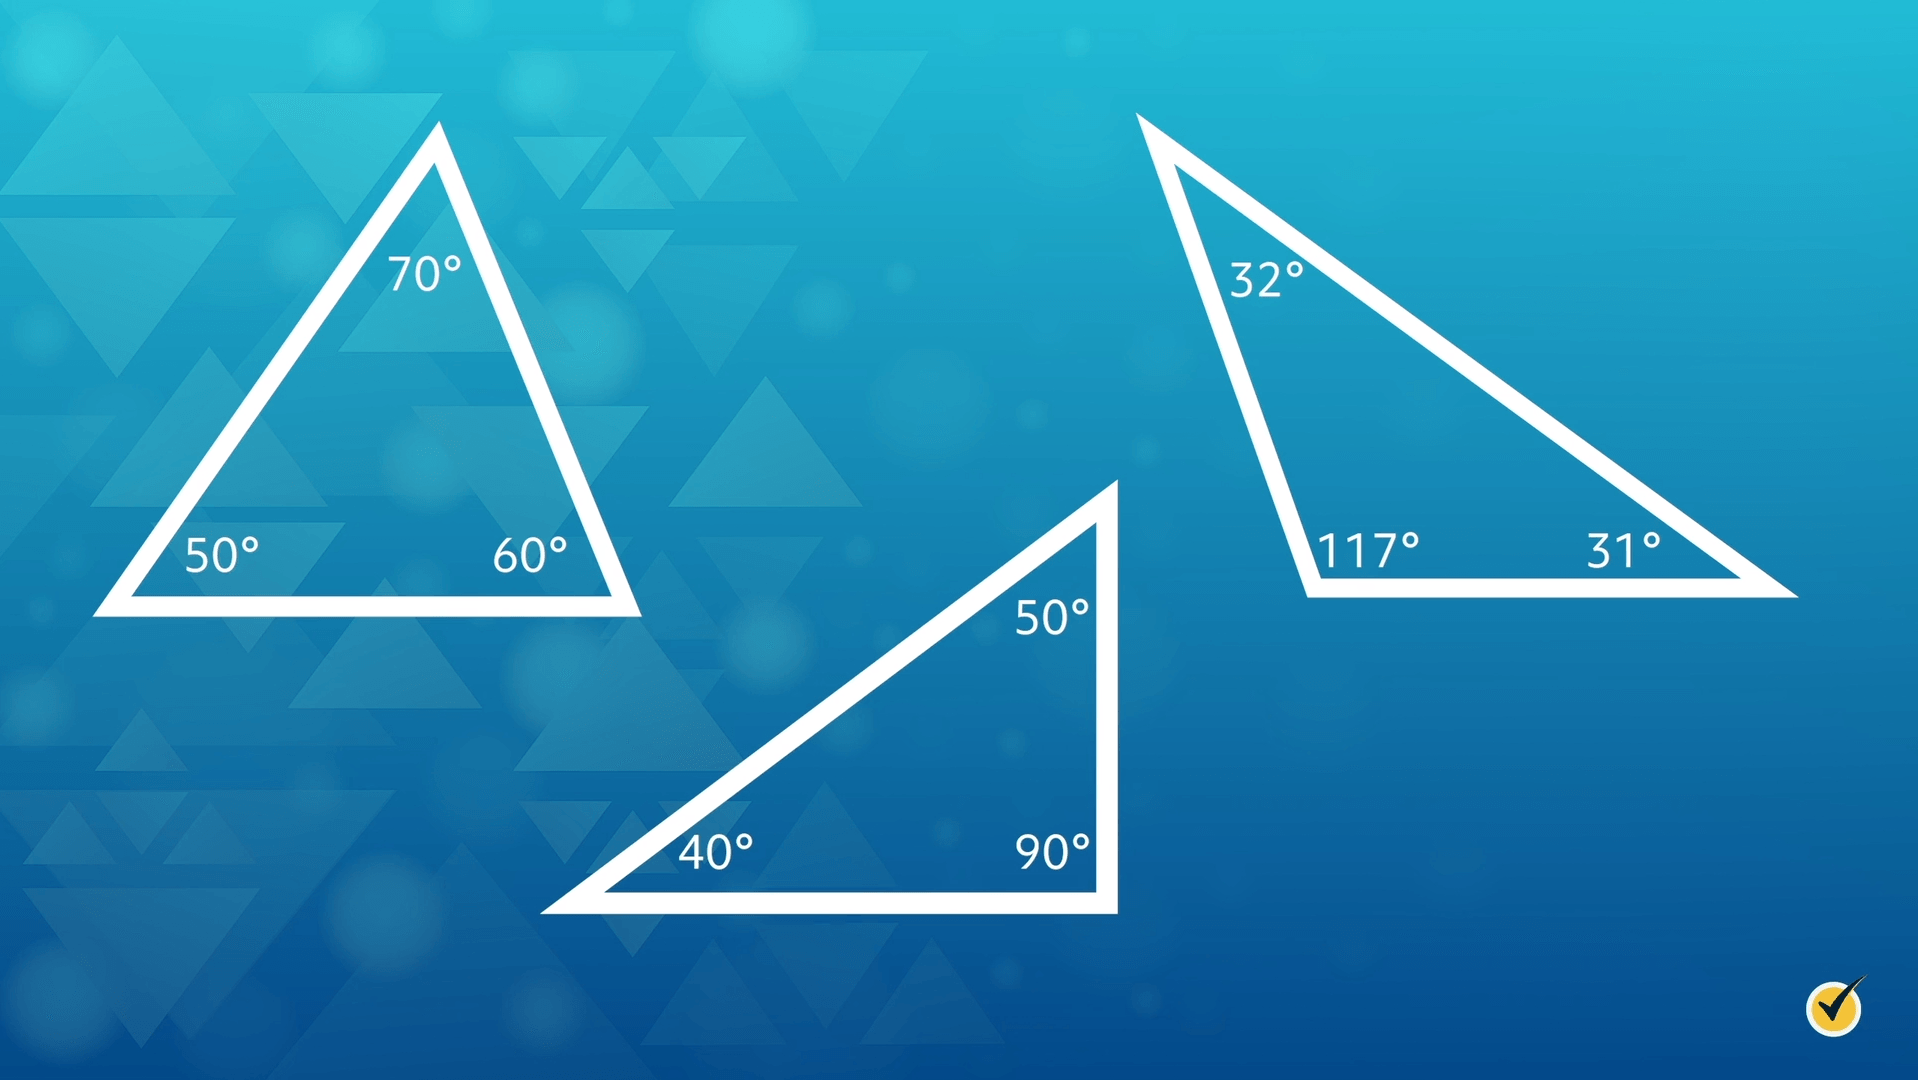 Triangle Pic